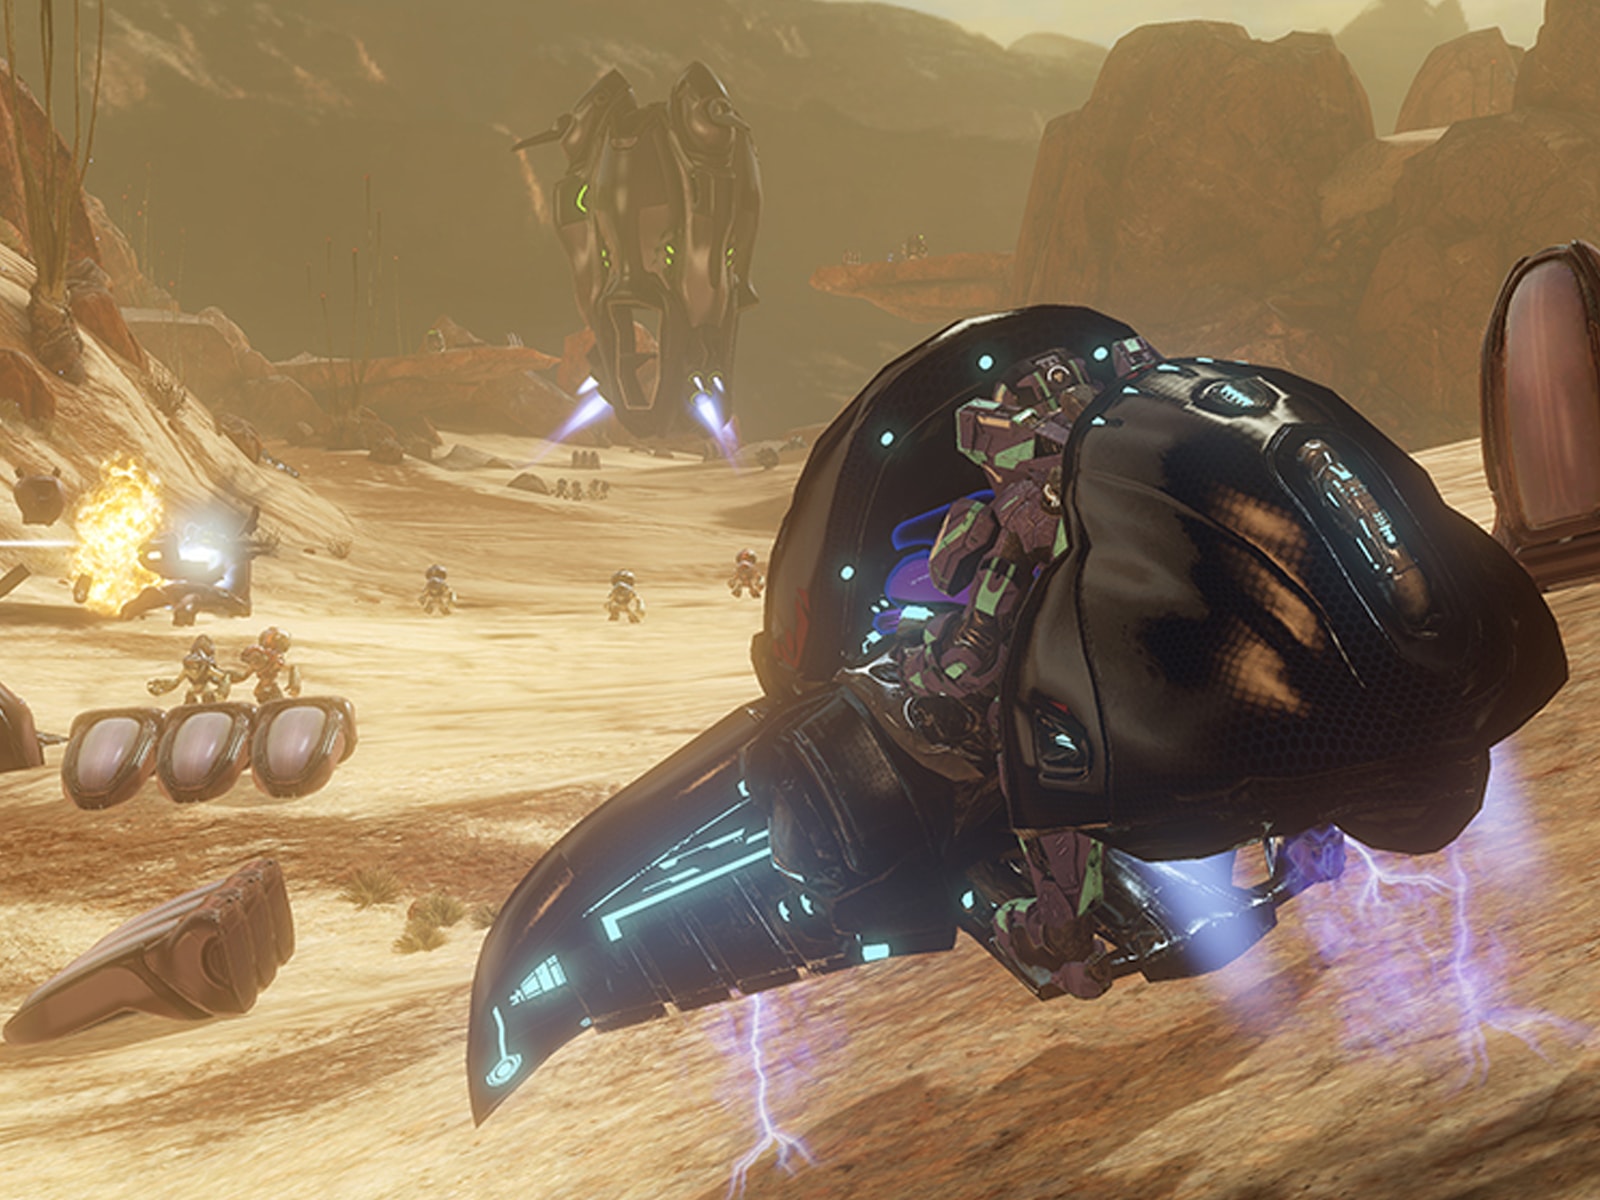 Screenshot from Halo 4 of futuristic machines flying through a mountainous desert